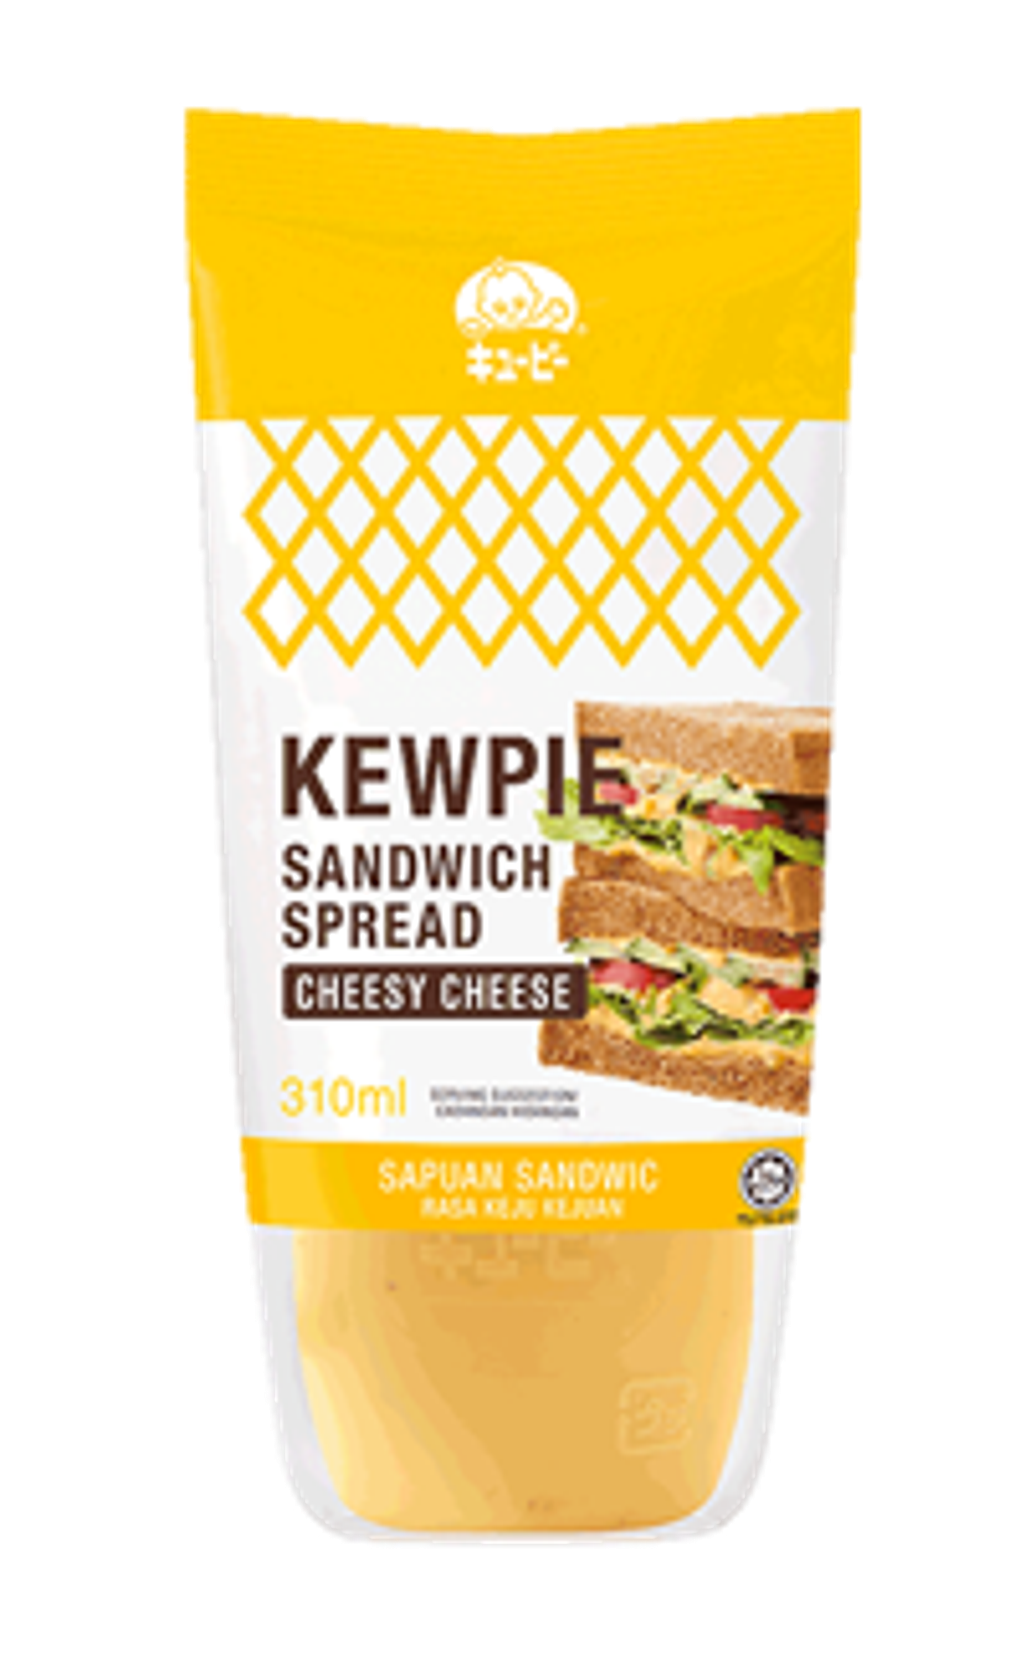 Kewpie-Sandwich-Spread-Cheesy-Cheese